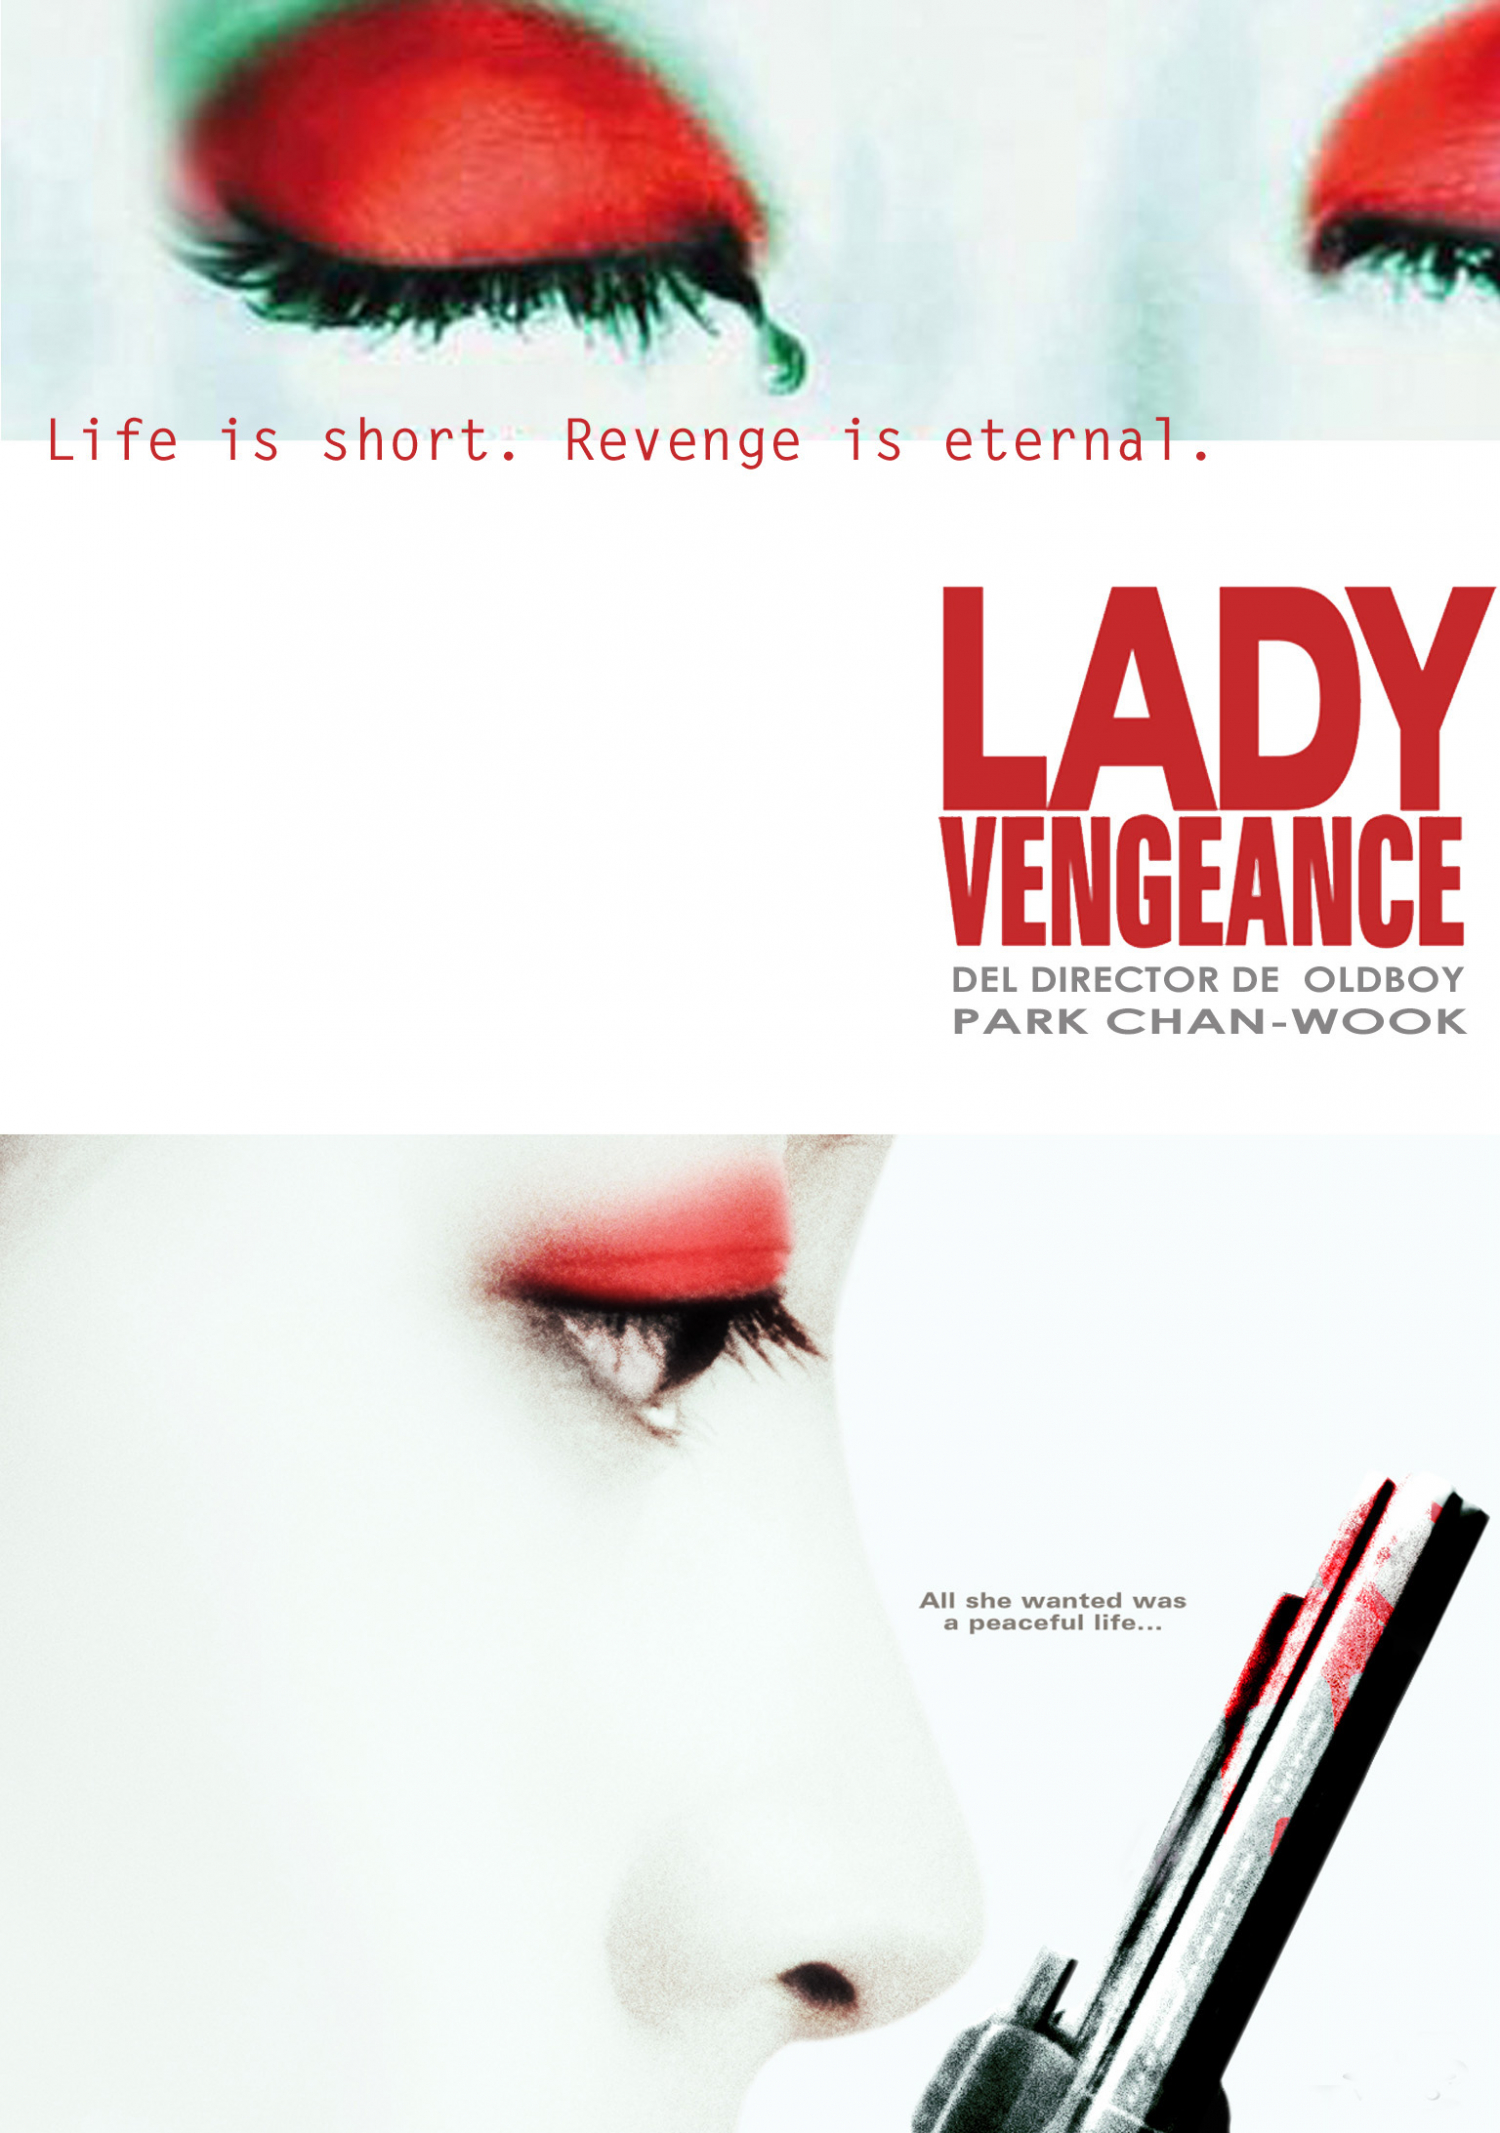 sympathy-for-lady-vengeance-poster-03.jpg